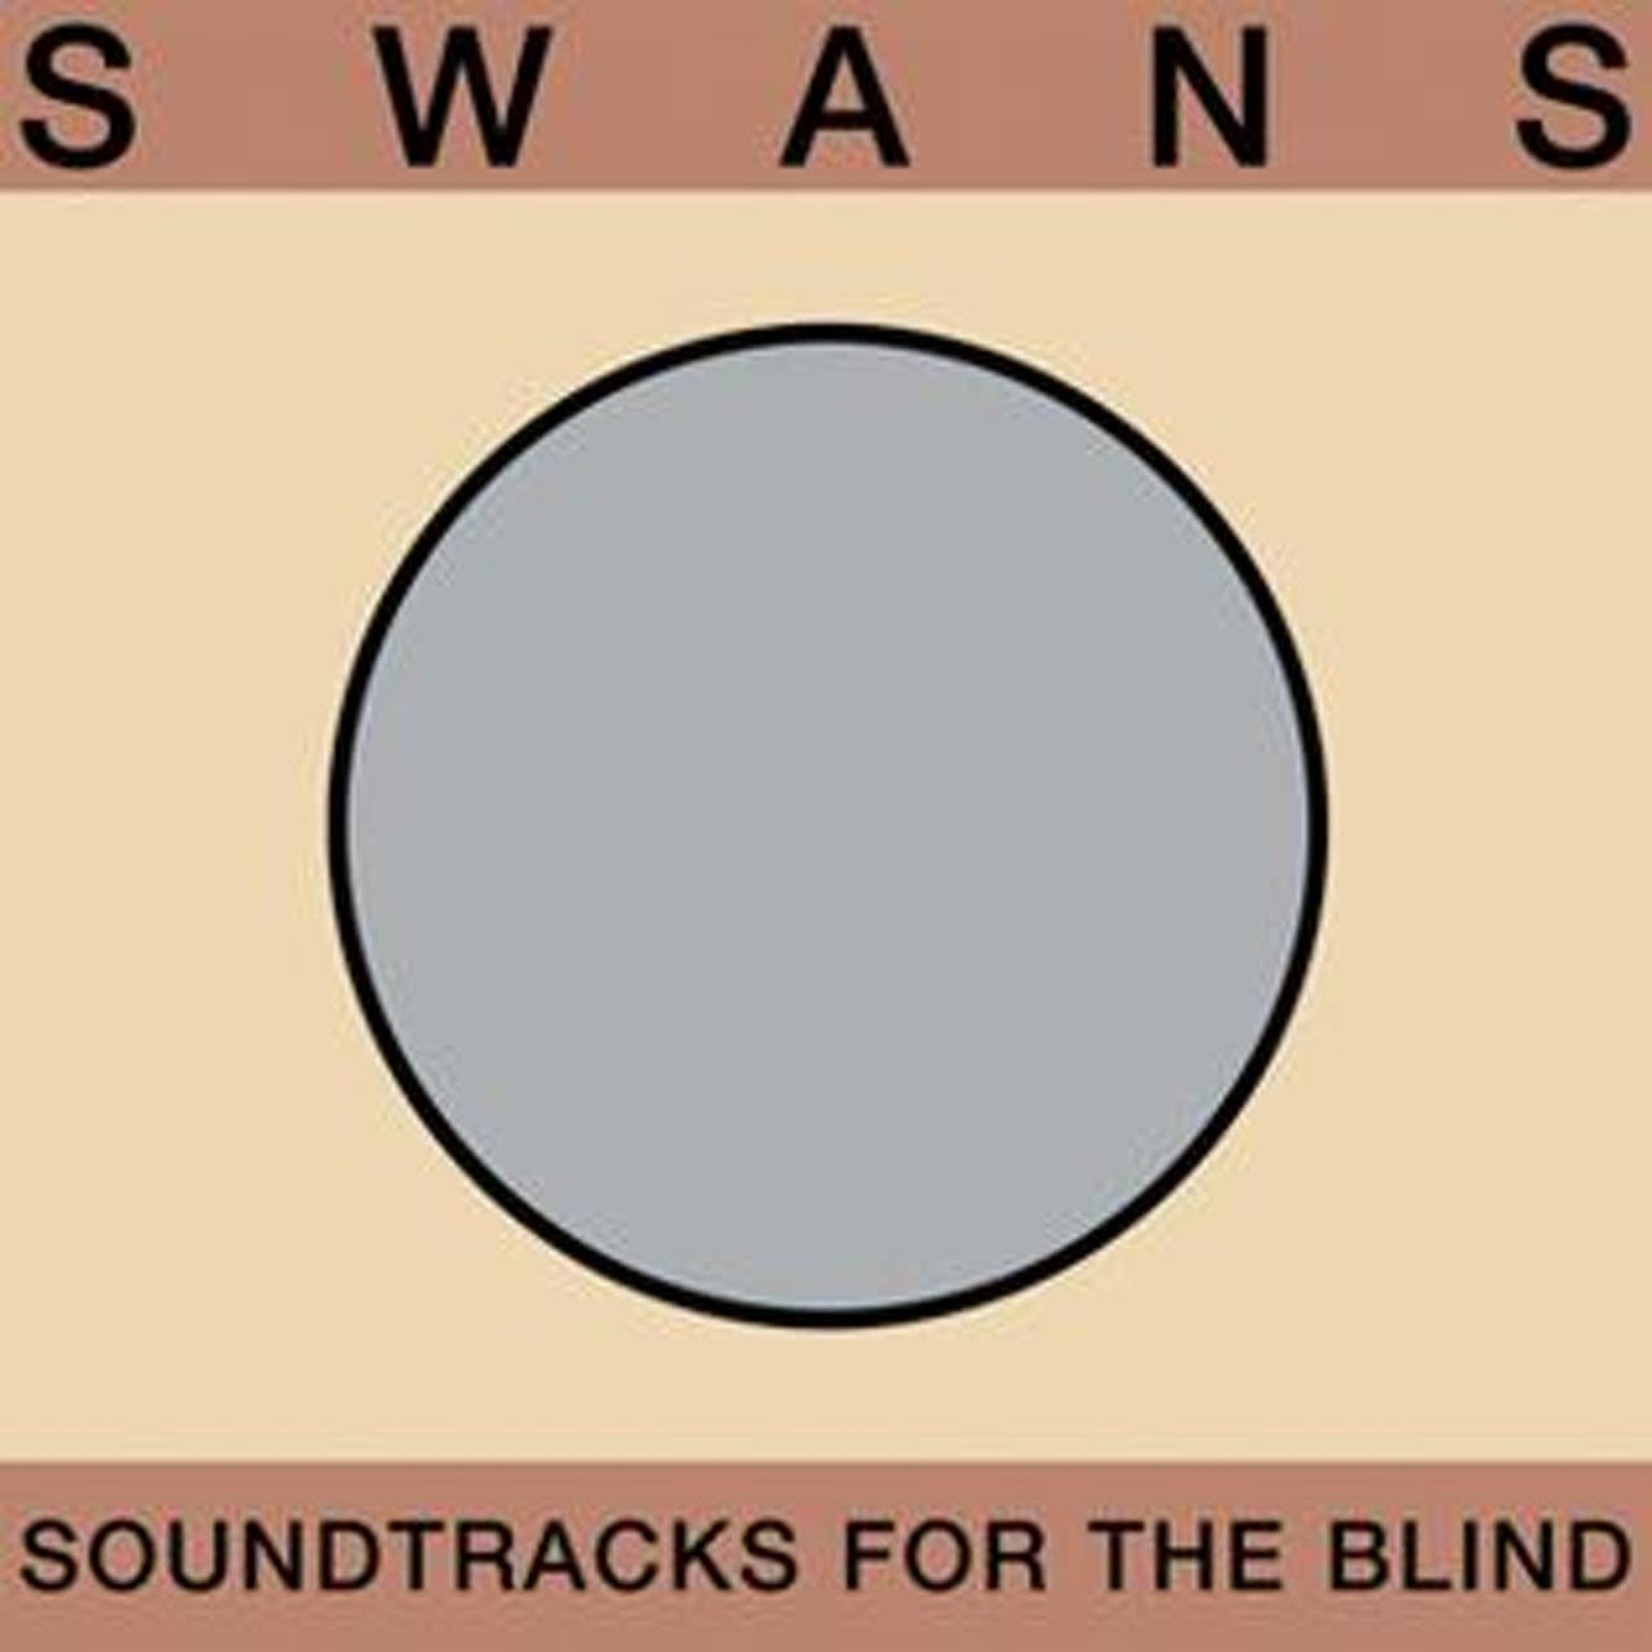 [New] Swans - Soundtracks For the Blind (4LP)